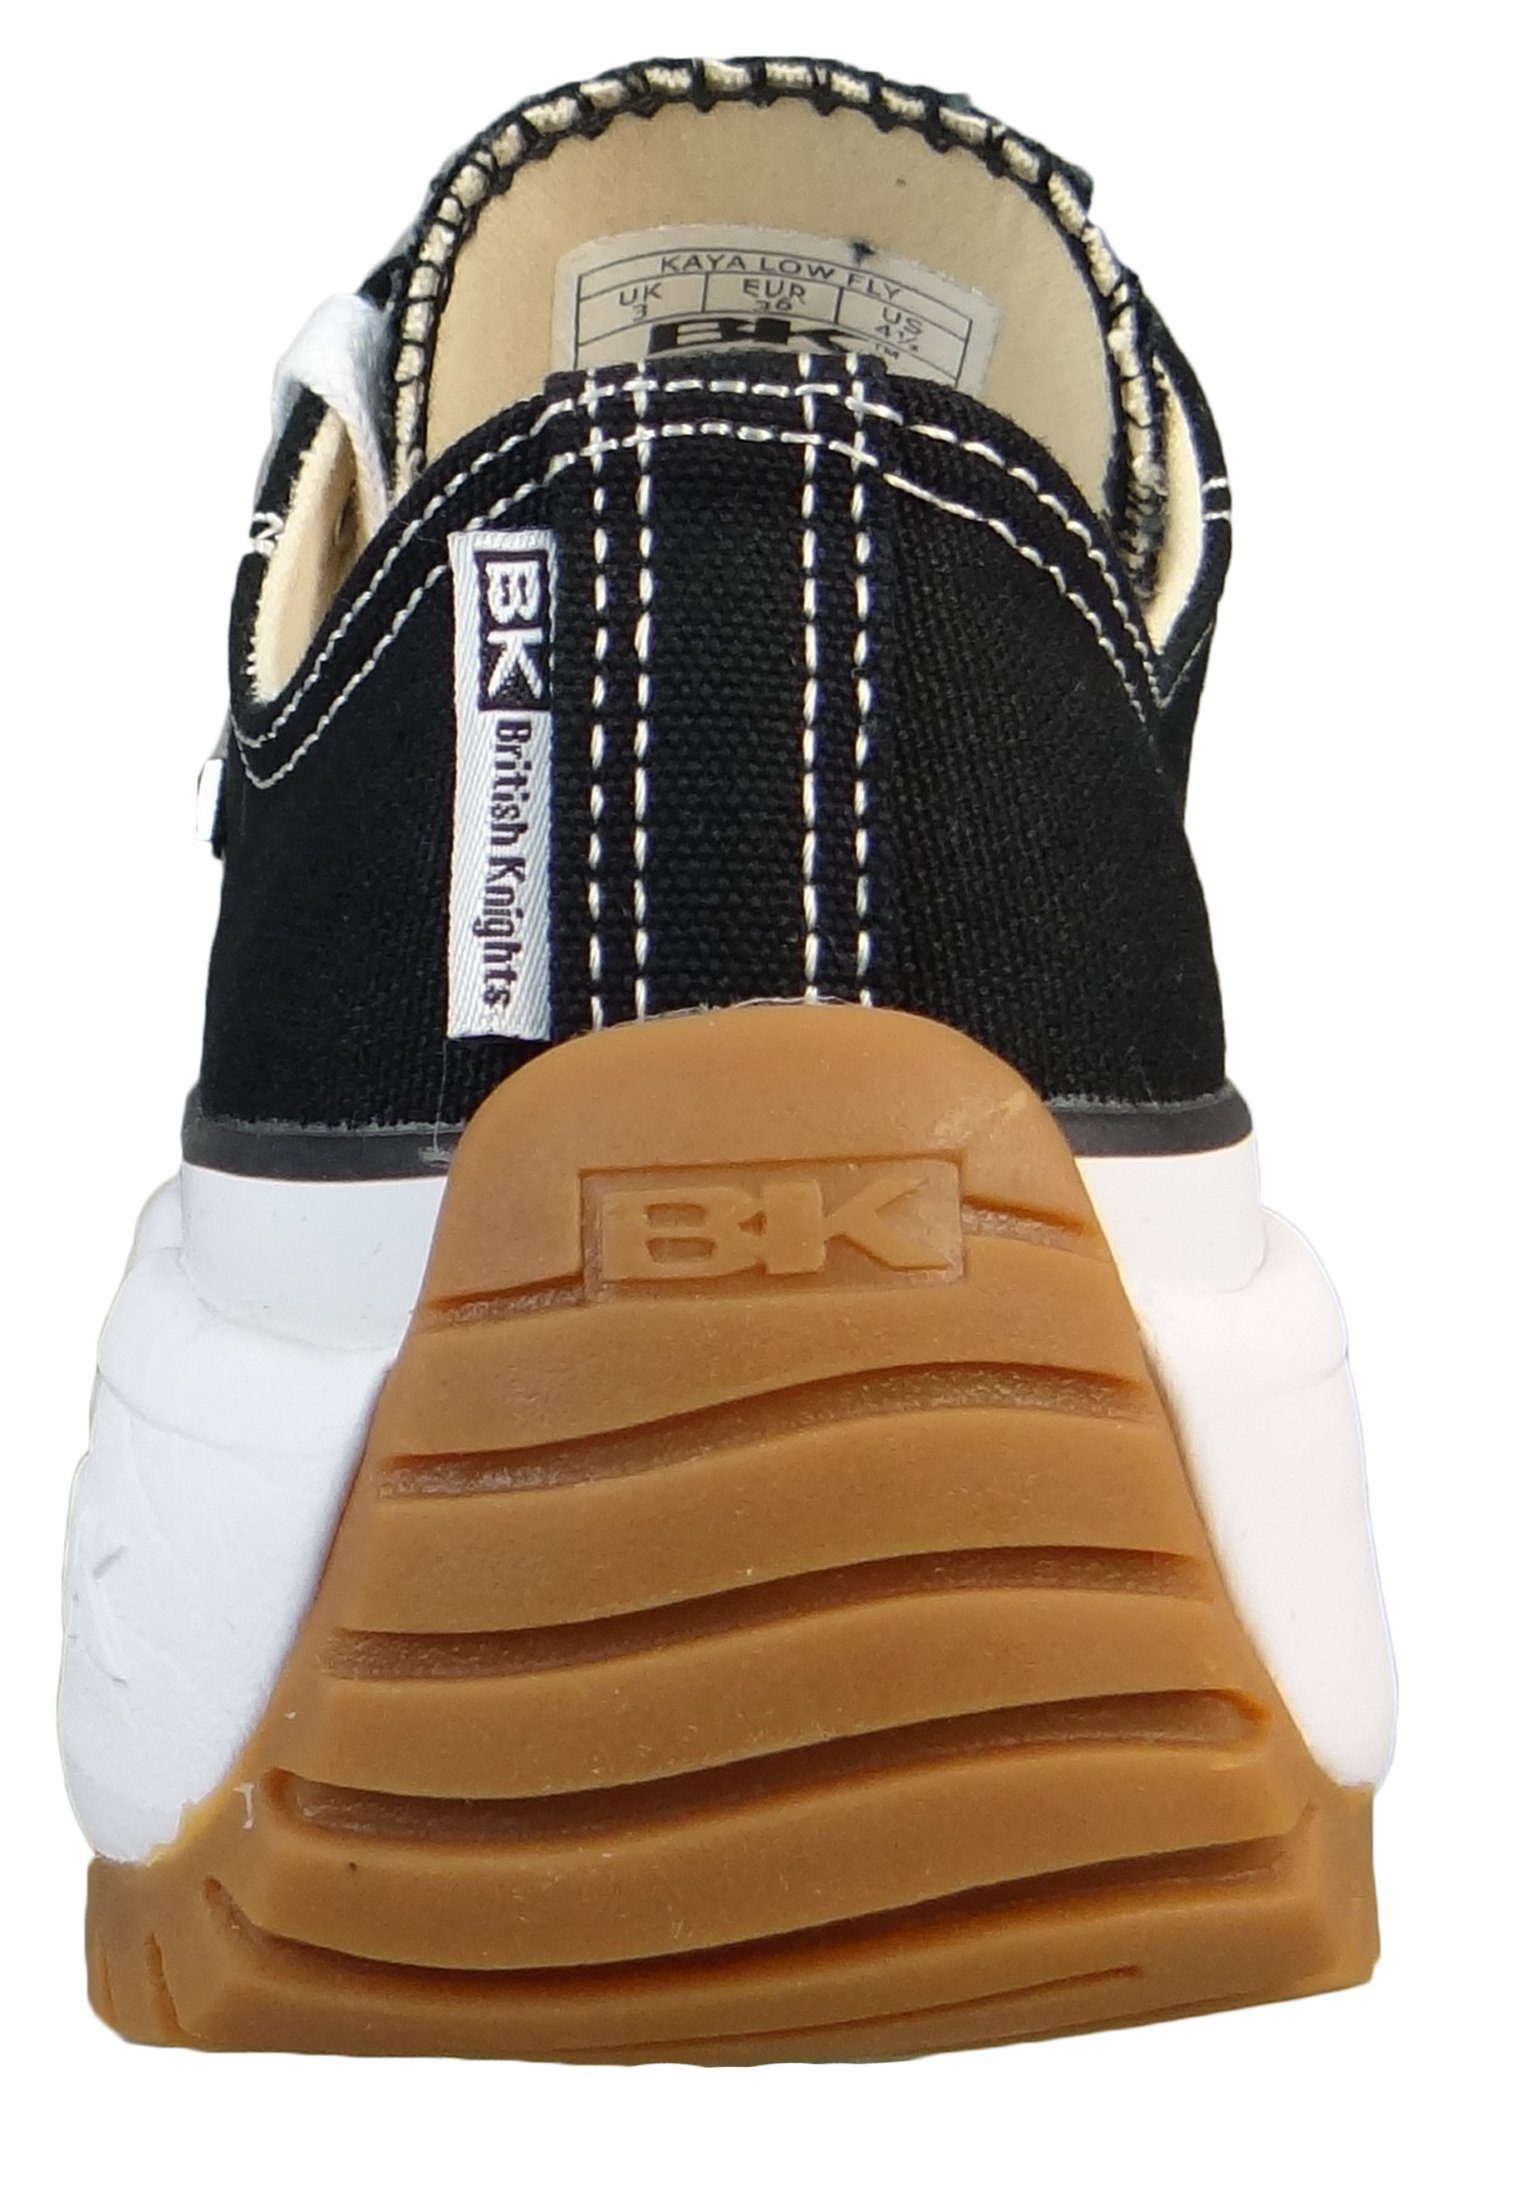 British Knights B50-3717 02 Black/White Sneaker